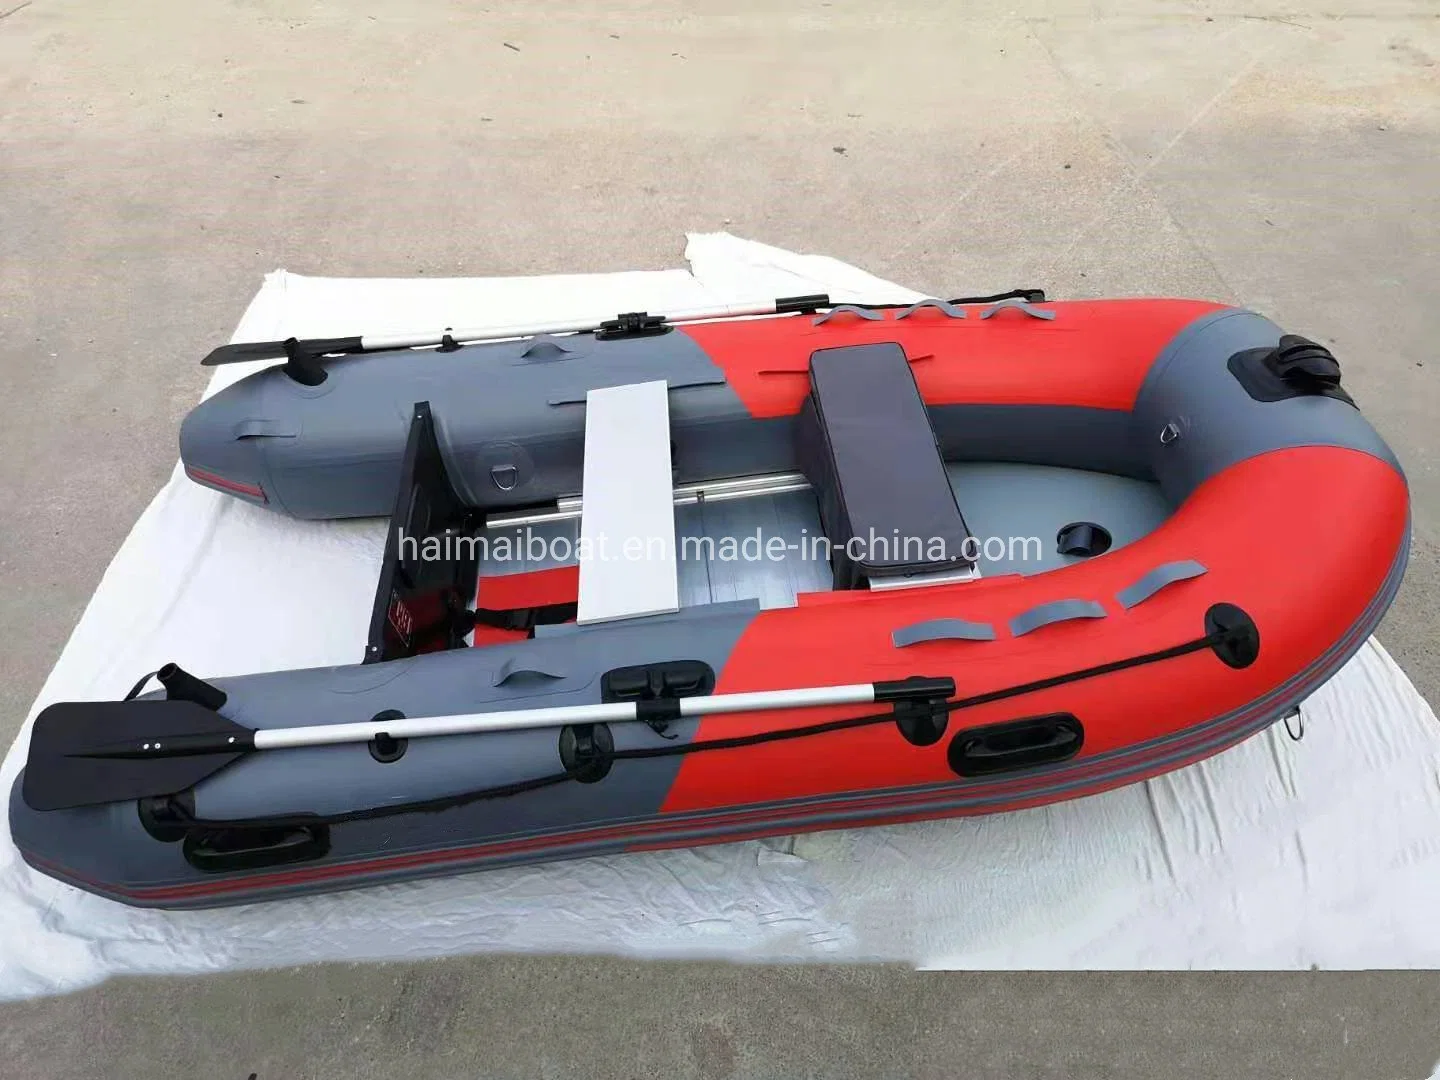 Rubber Sport Boat 10.8feet 3.3m Fishing Boat Inflatable Boat Motor Boat